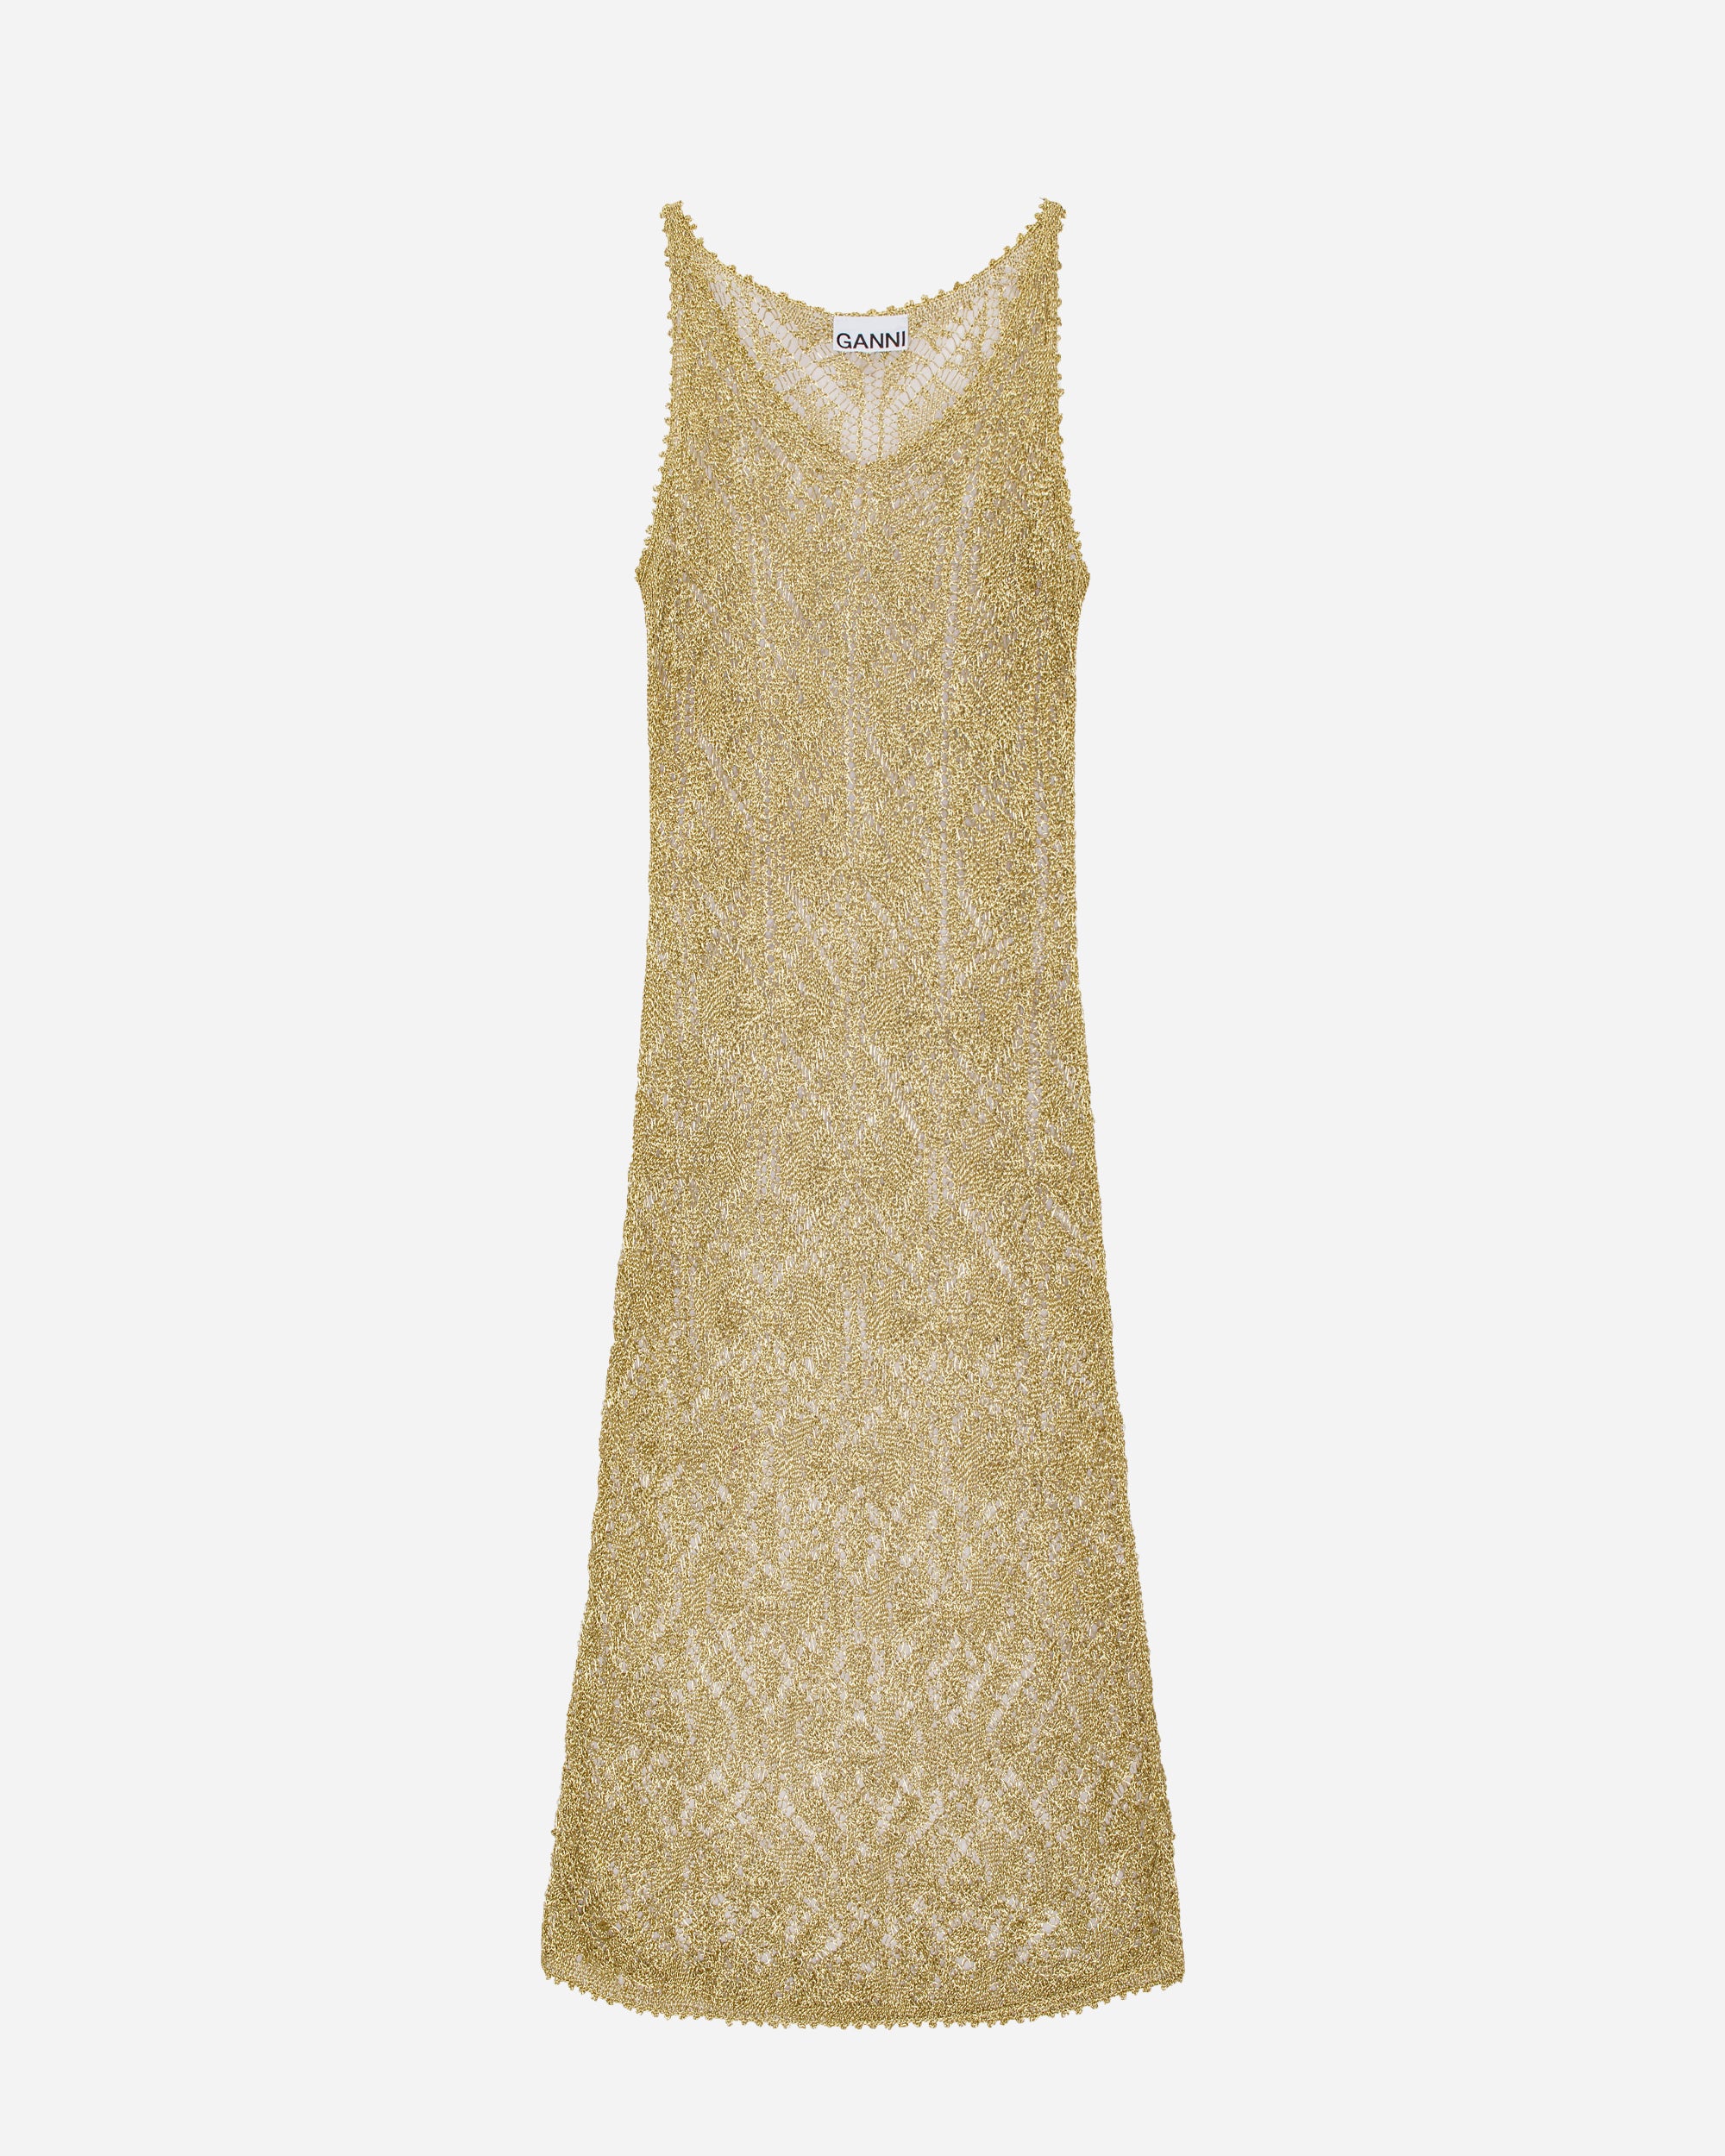 Ganni Metallic Strap Dress Golden K2234